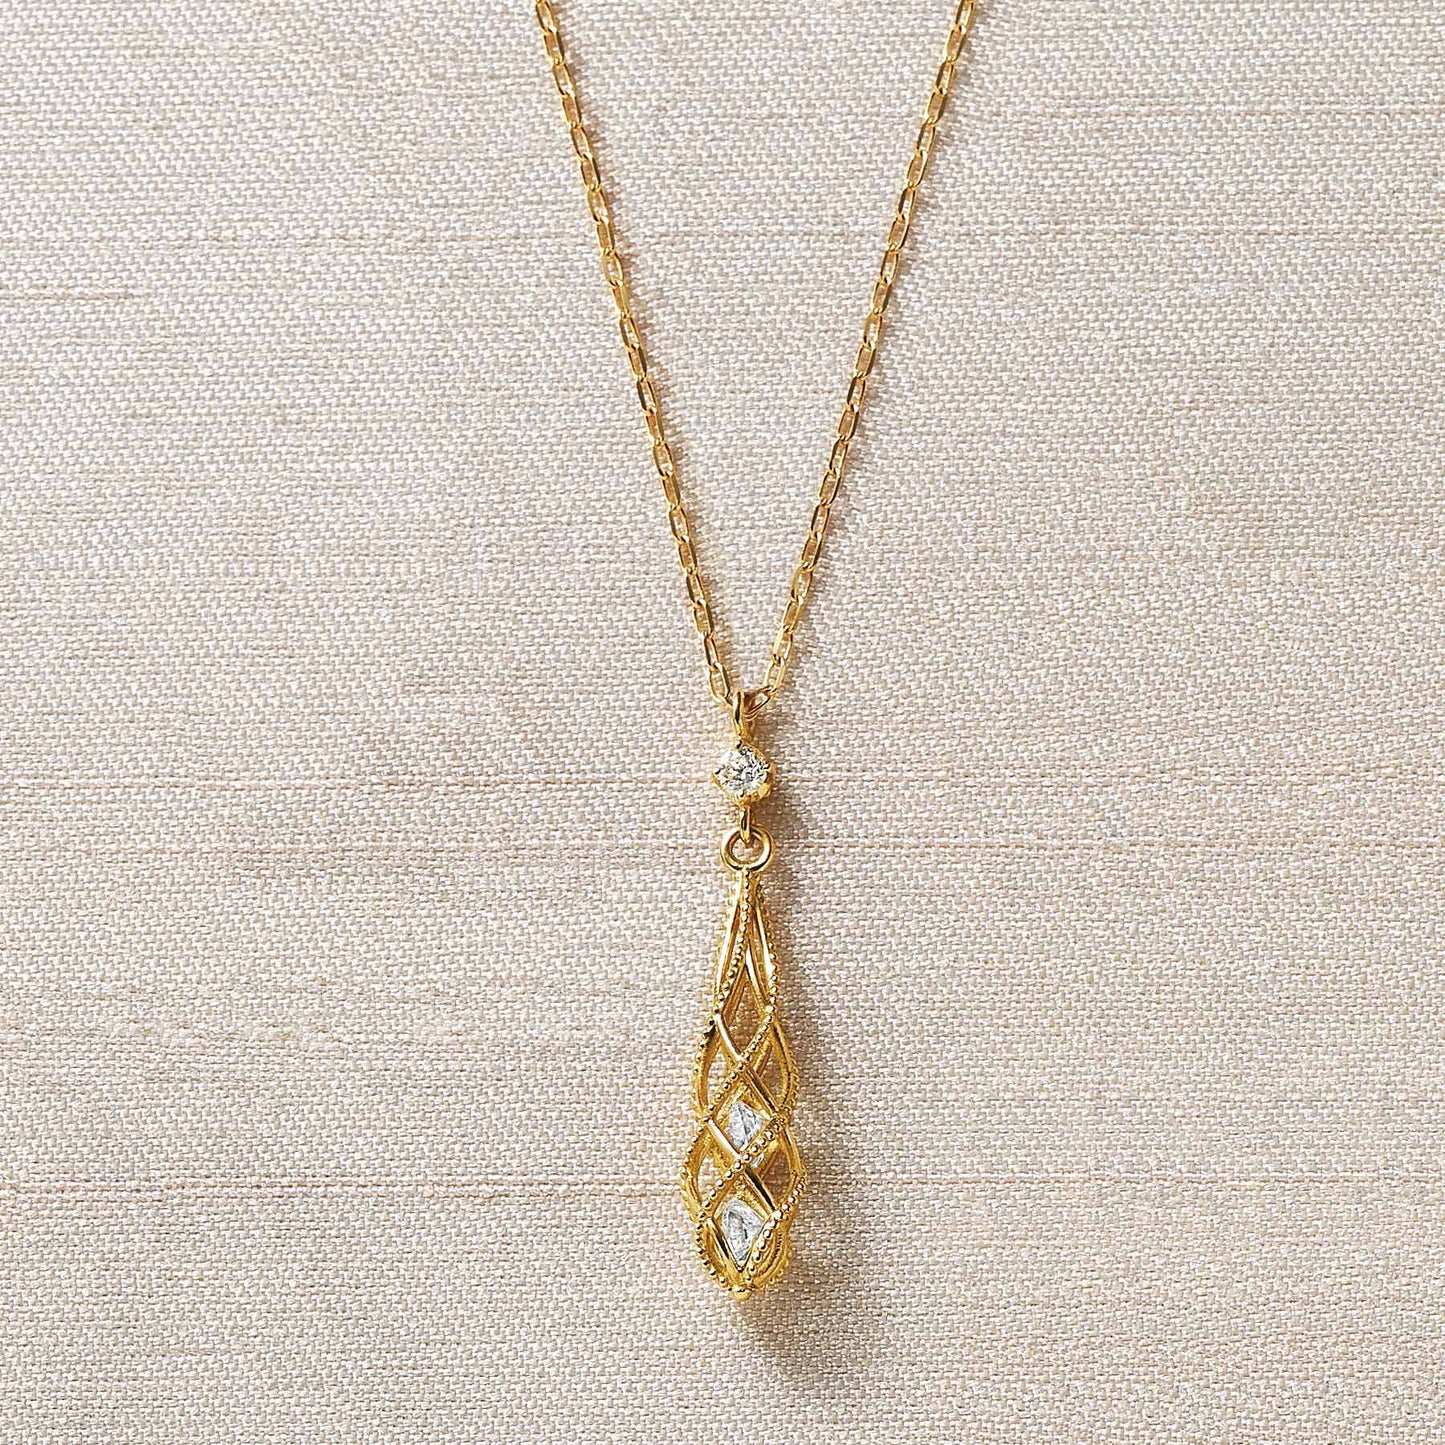 18K Yellow Gold Pannier Long Drop Necklace - Product Image